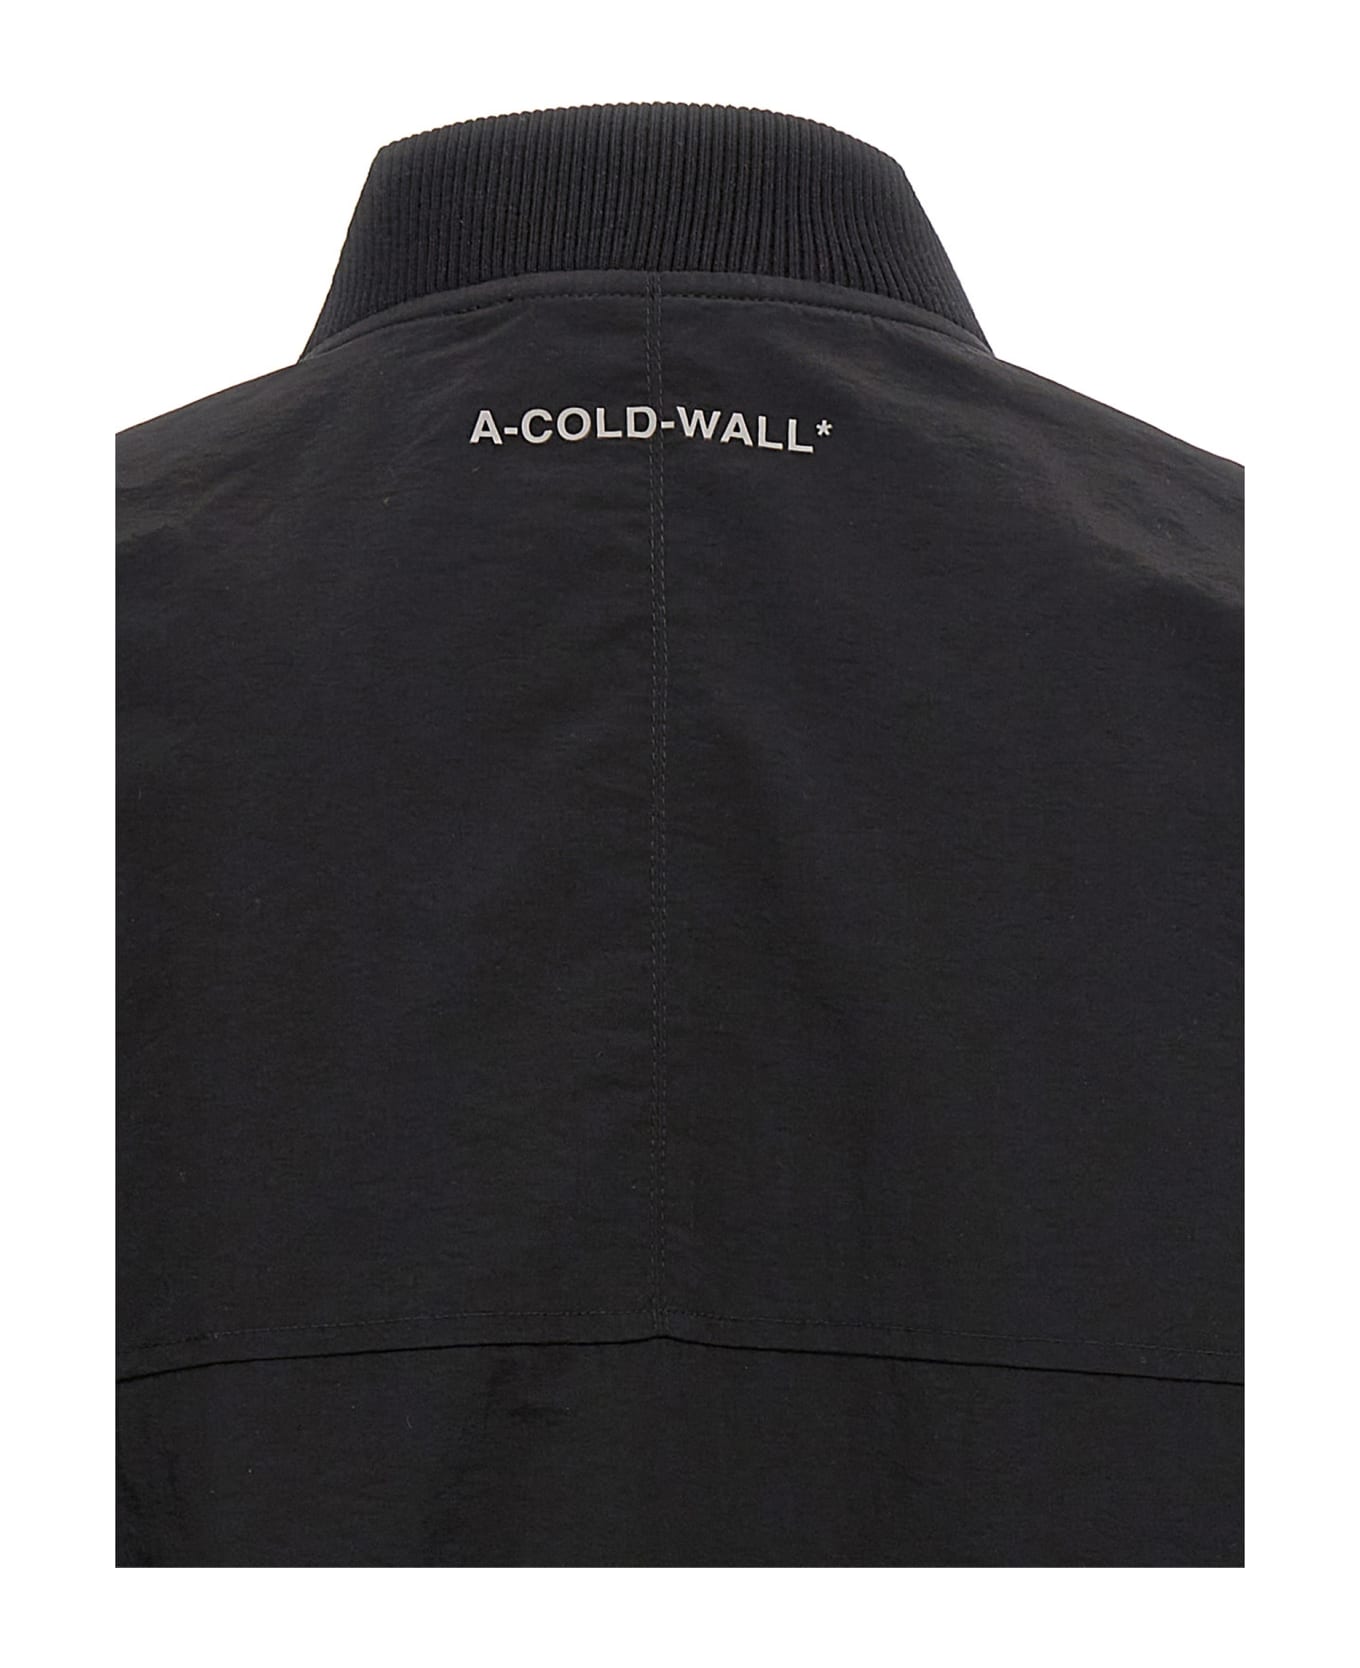 A-COLD-WALL 'imprint' Bomber Jacket - Black  